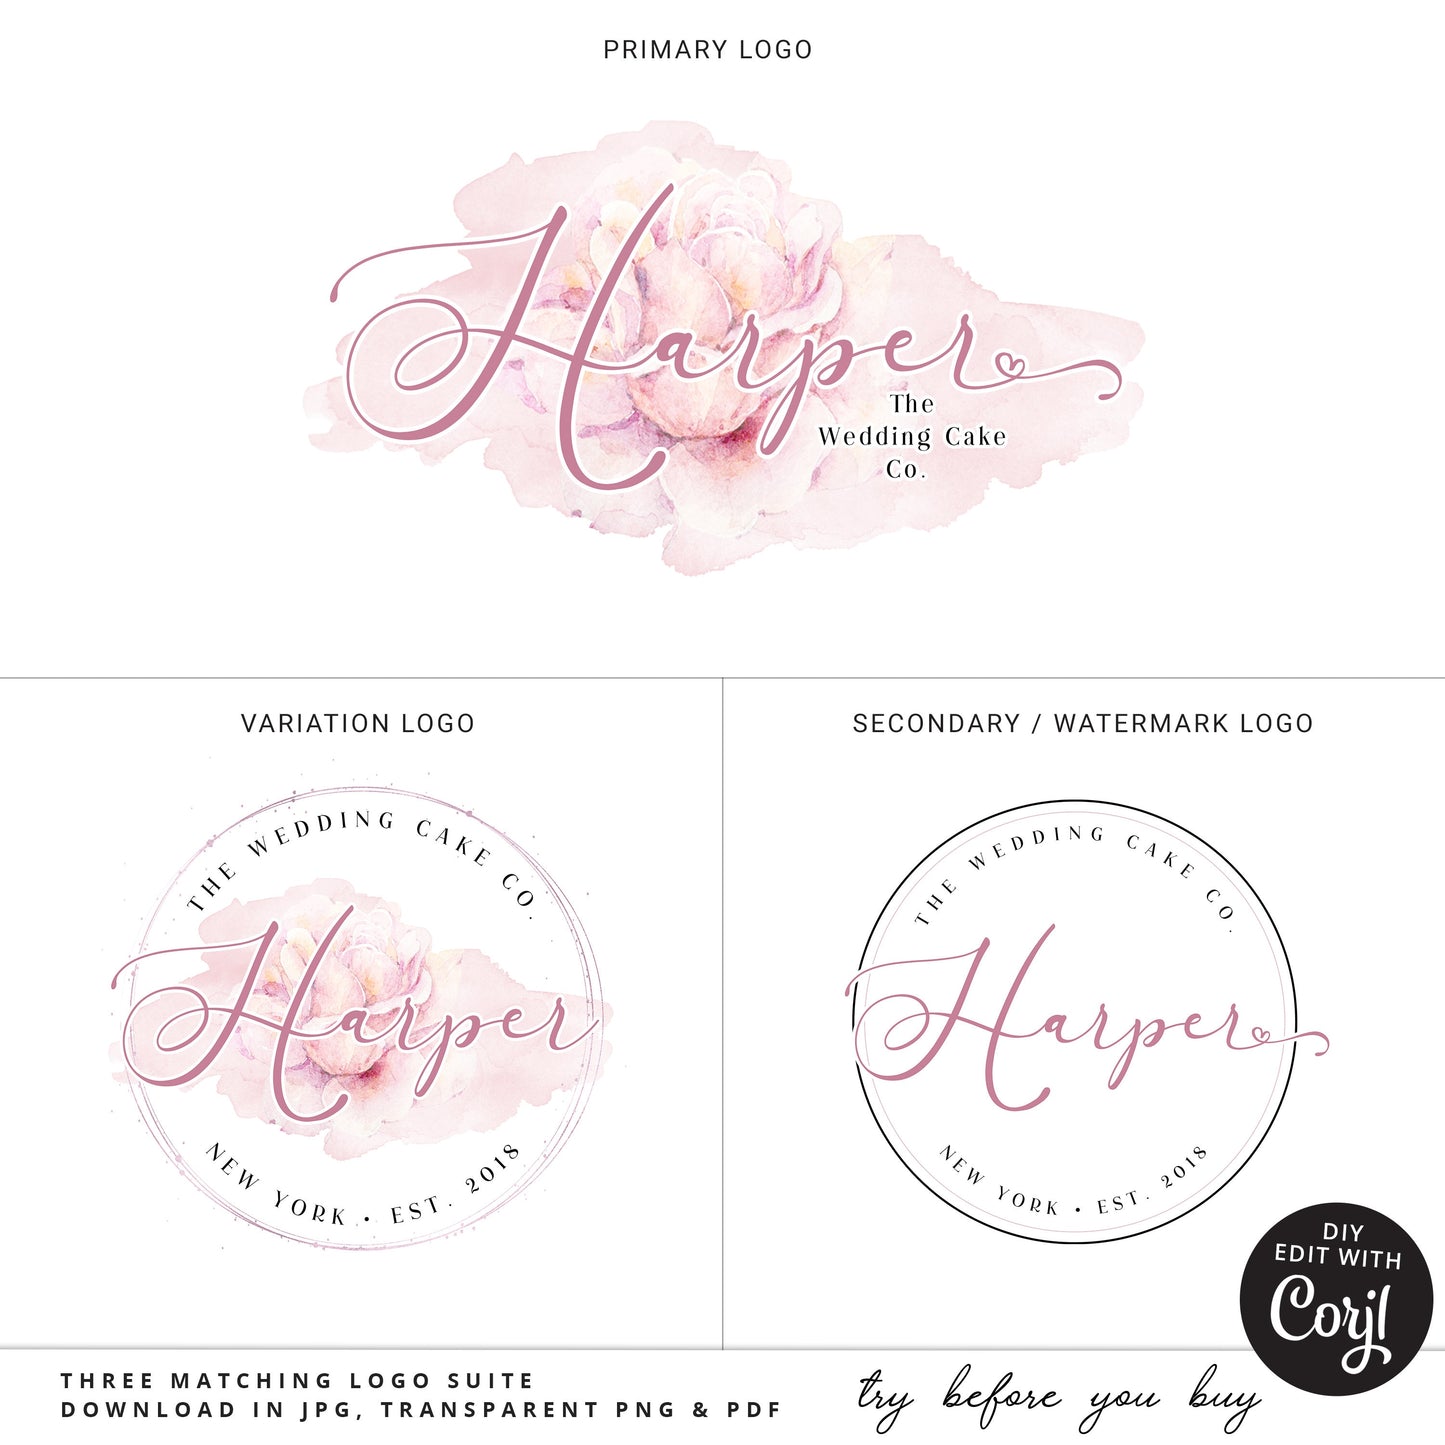 DIY Edit Logo Bundle, Editable Logo Template Kit, Instant Soft Pink Watercolor Business Logo, Premade Beauty Logo, Company Logo Set HW-001